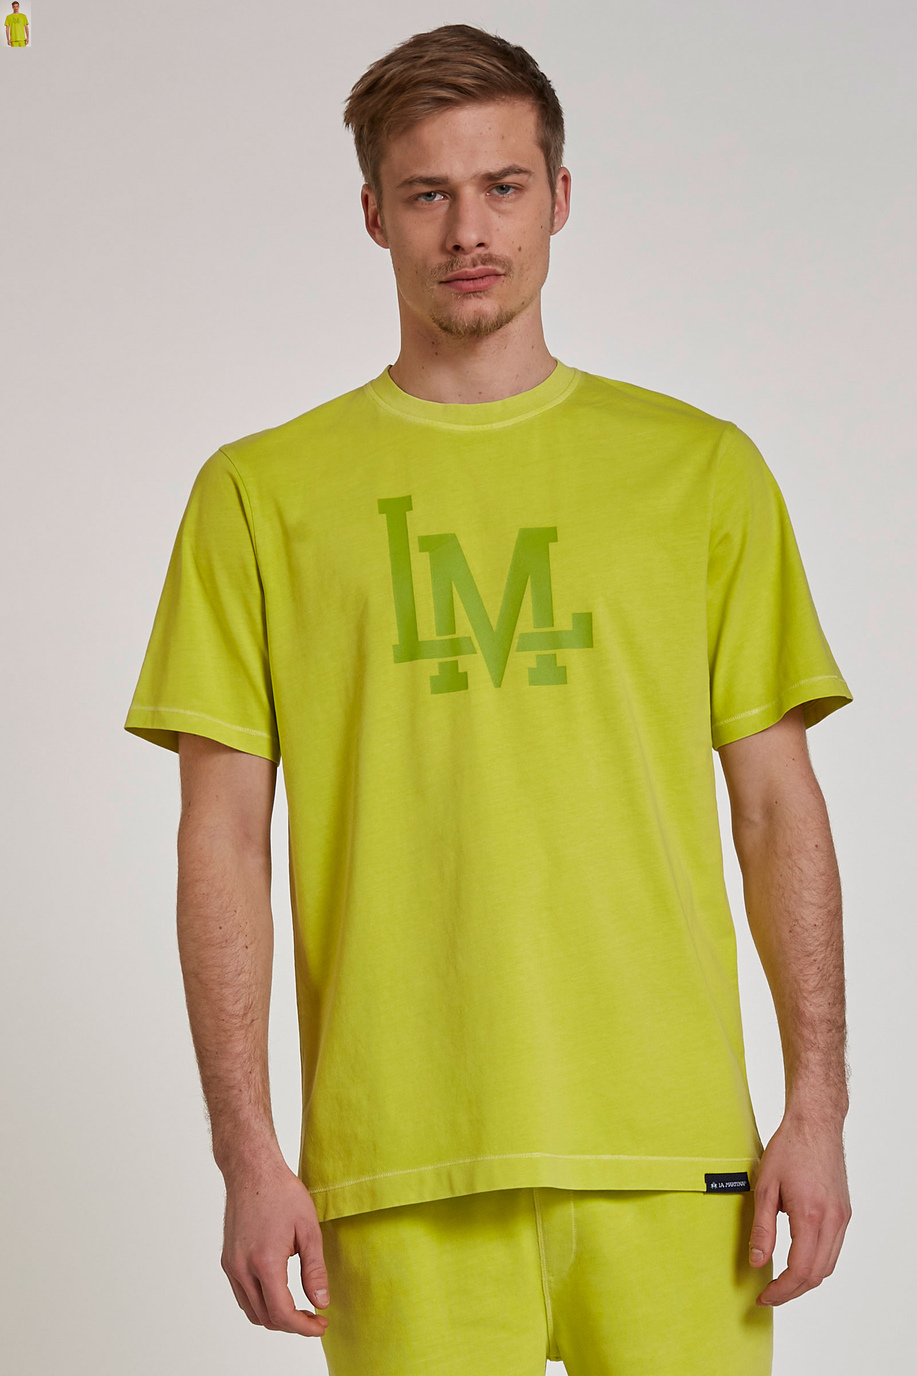 Herren-T-Shirt mit kurzem Arm aus Baumwolle, oversized Modell - Look | La Martina - Official Online Shop